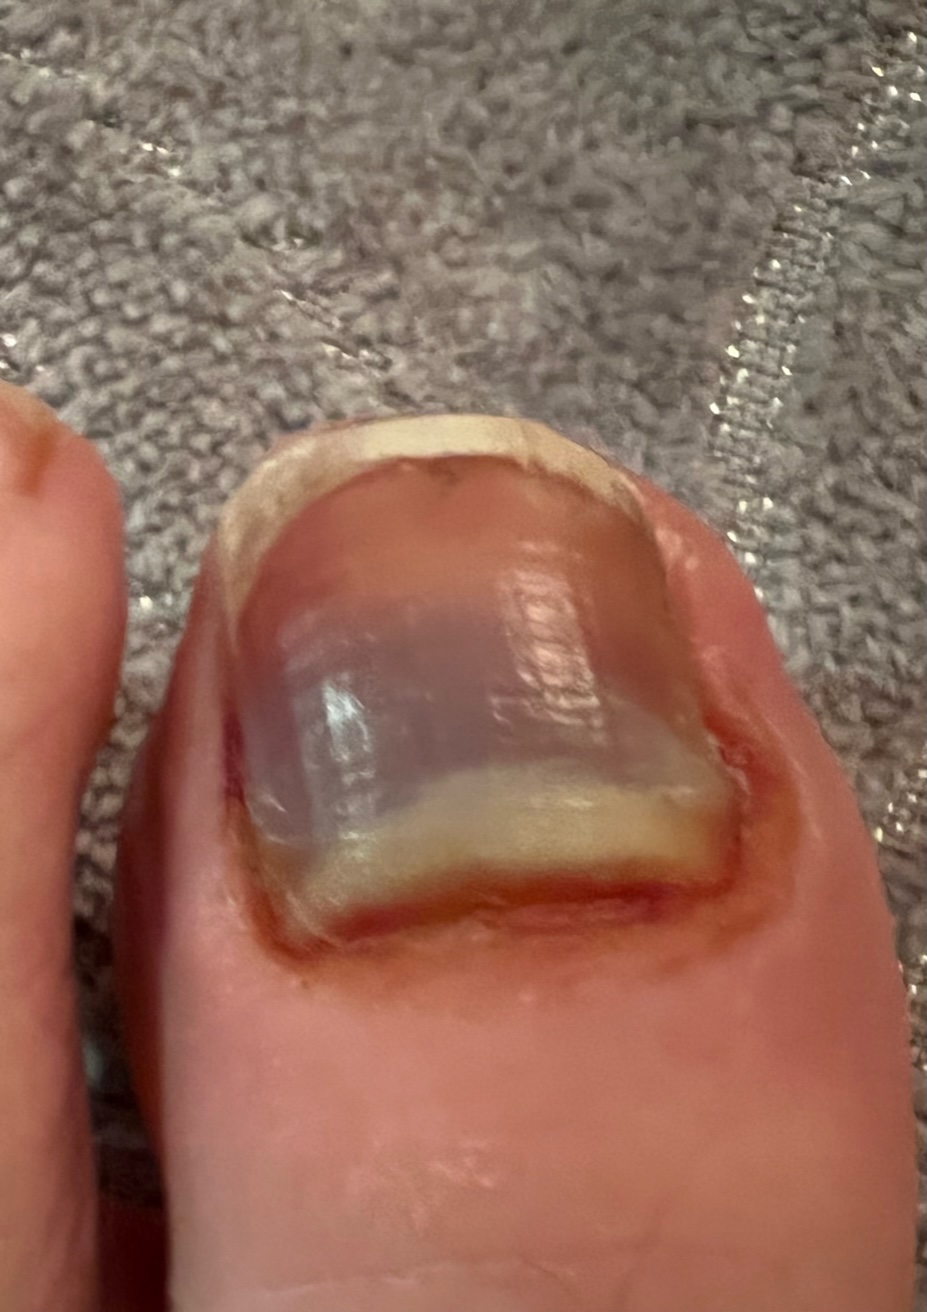 Big toe showing initial bruising